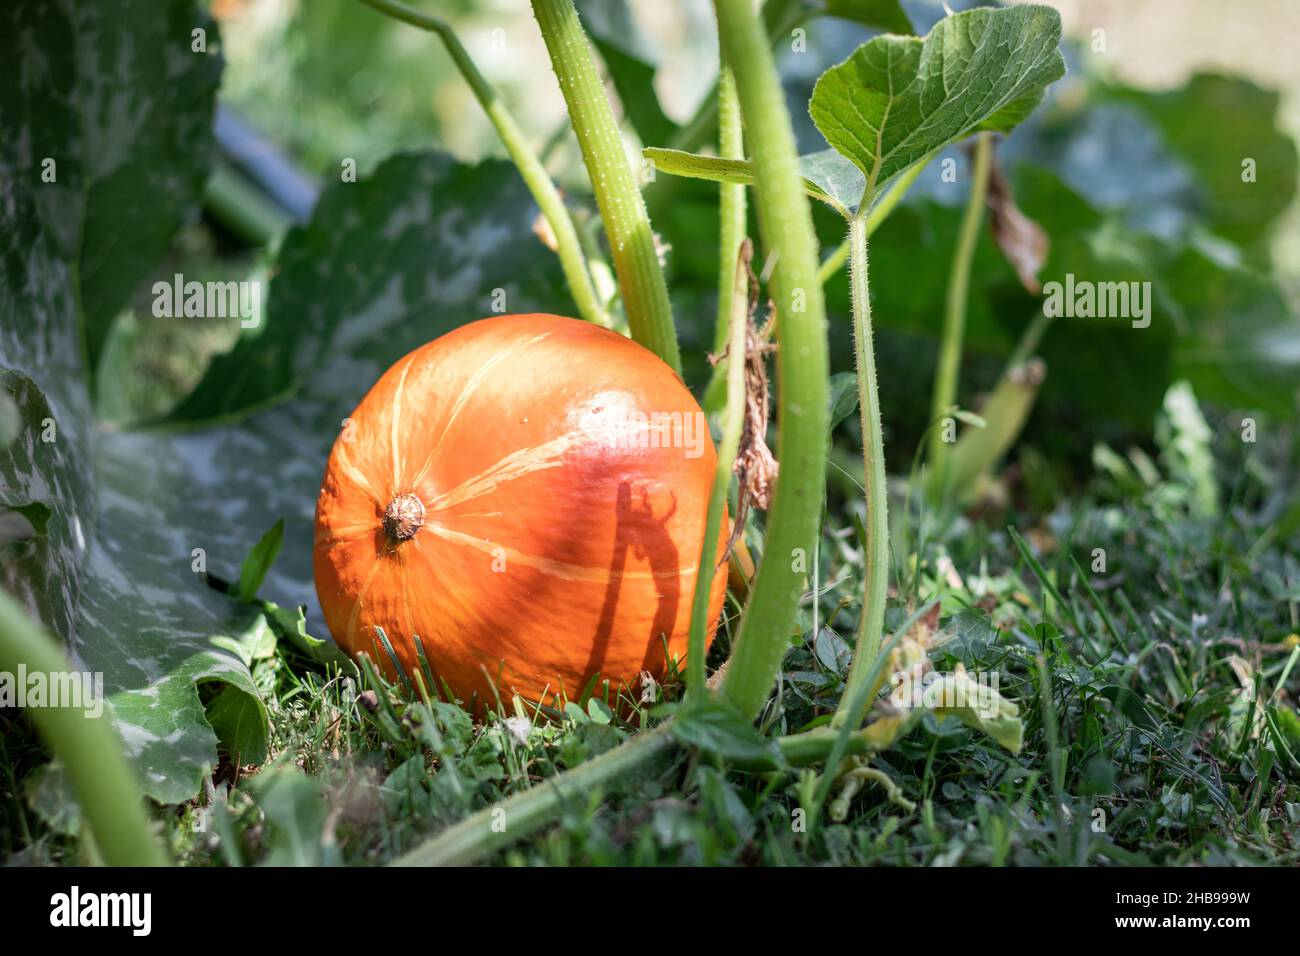 Pumpkin hokkaido in organic garden. Ripe vegetable in agricultural field. Growing pumpkins at farm Stock Photo